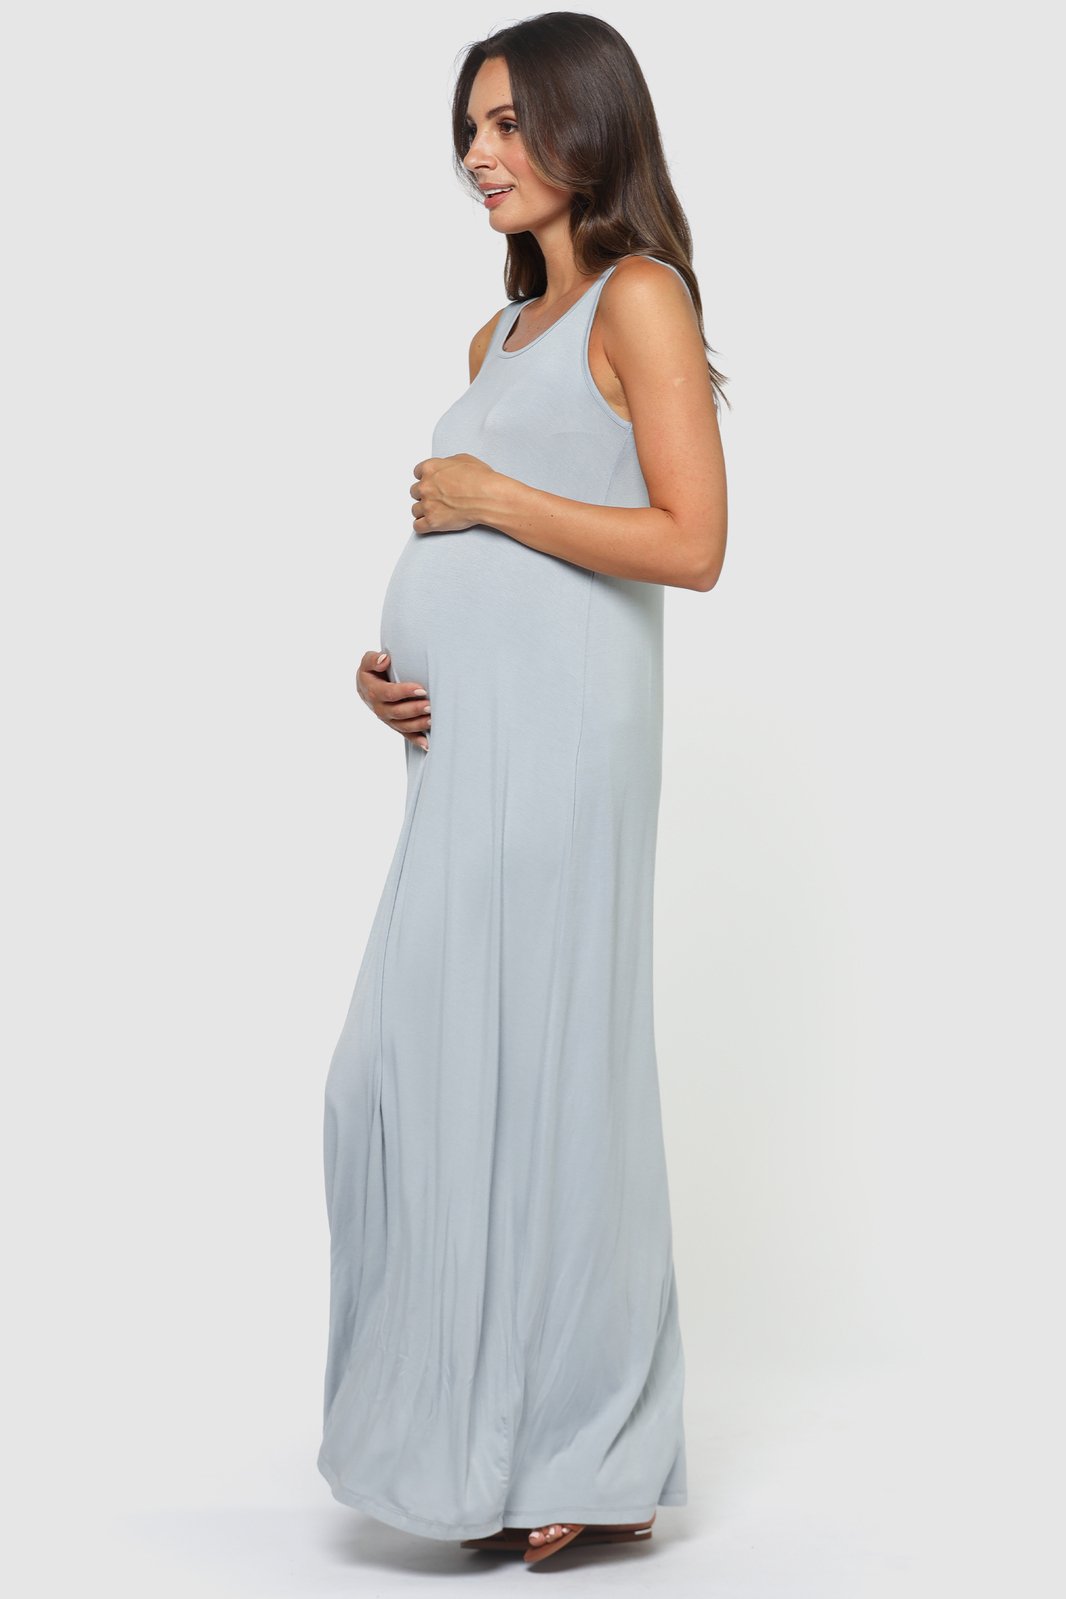 Organic Bamboo Maxi Maternity Dress Dress from Bamboo Body maternity online store brisbane sydney perth australia